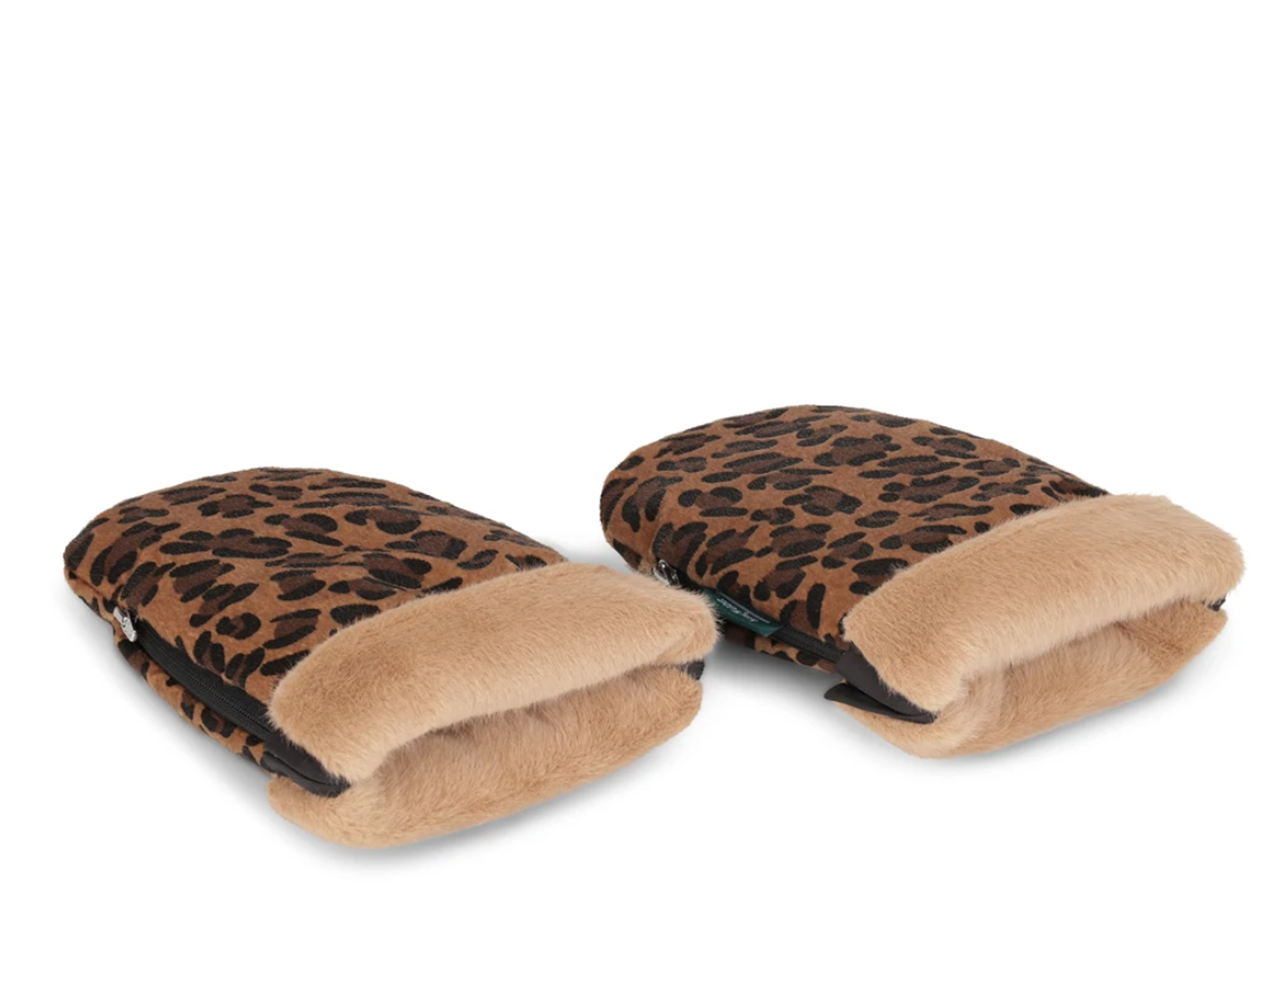 Kong Walther barnevogns handsker, leopard m/ lys pels